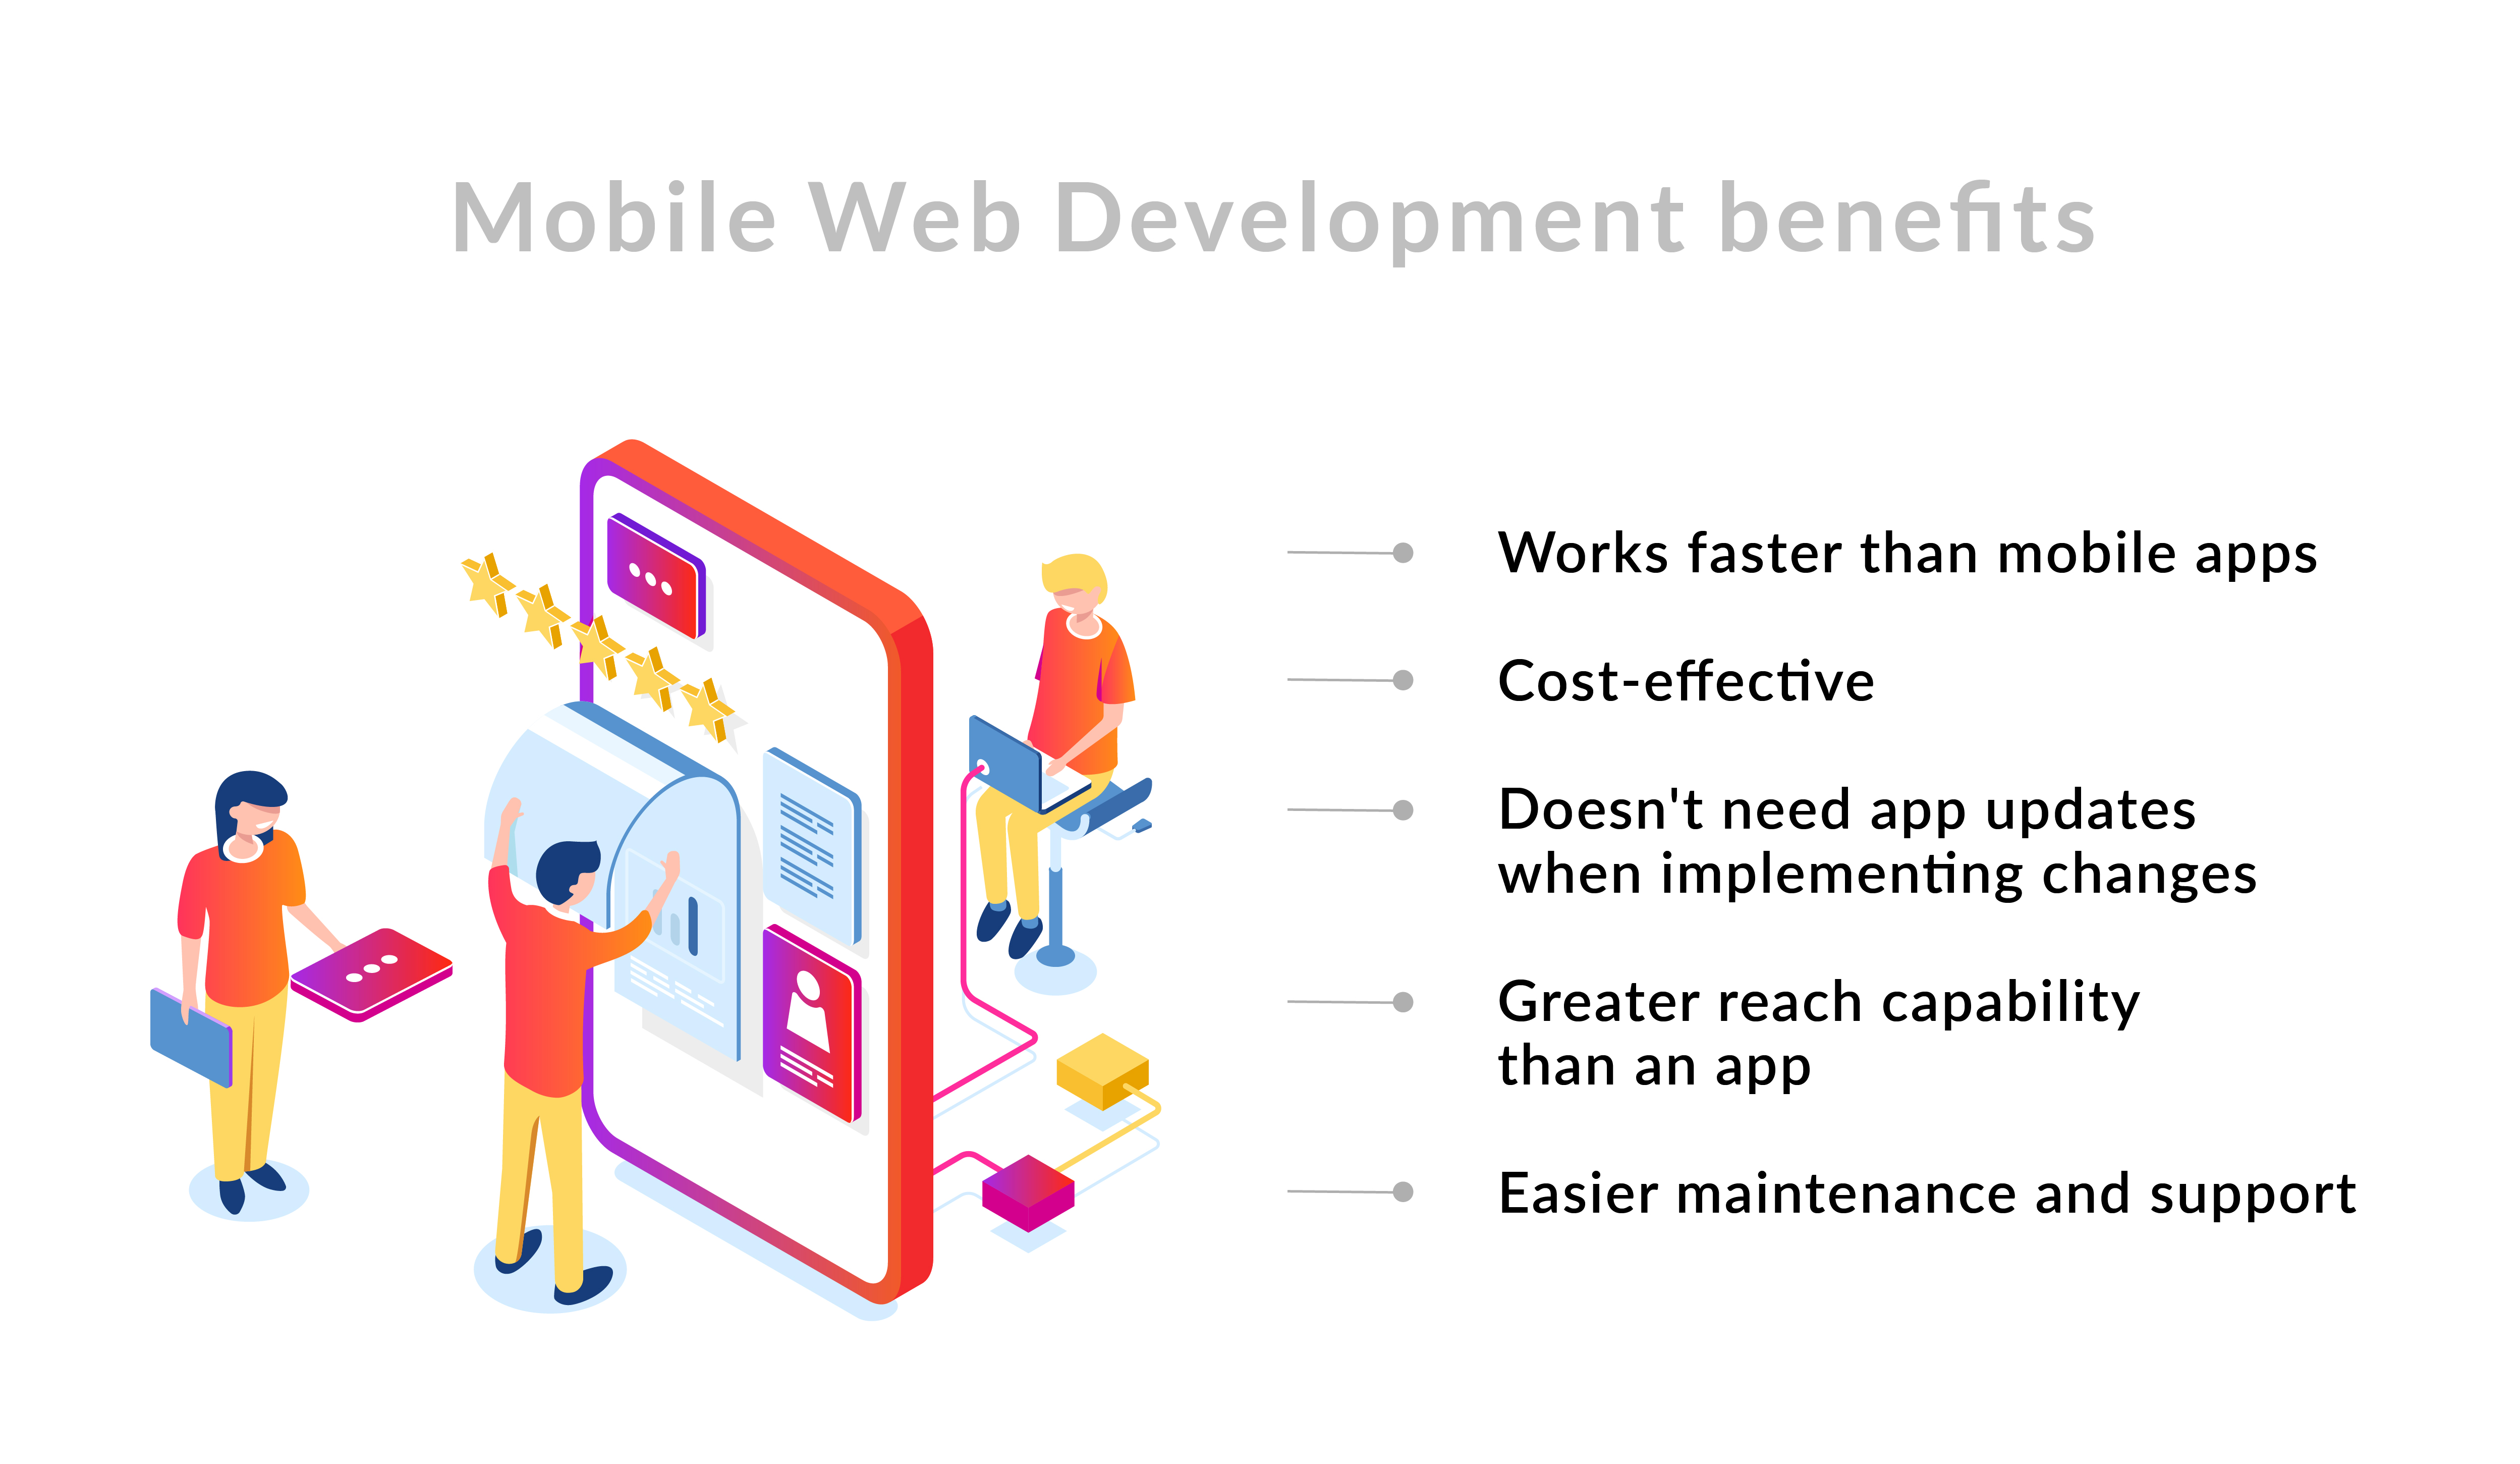 Mobile web development benefits